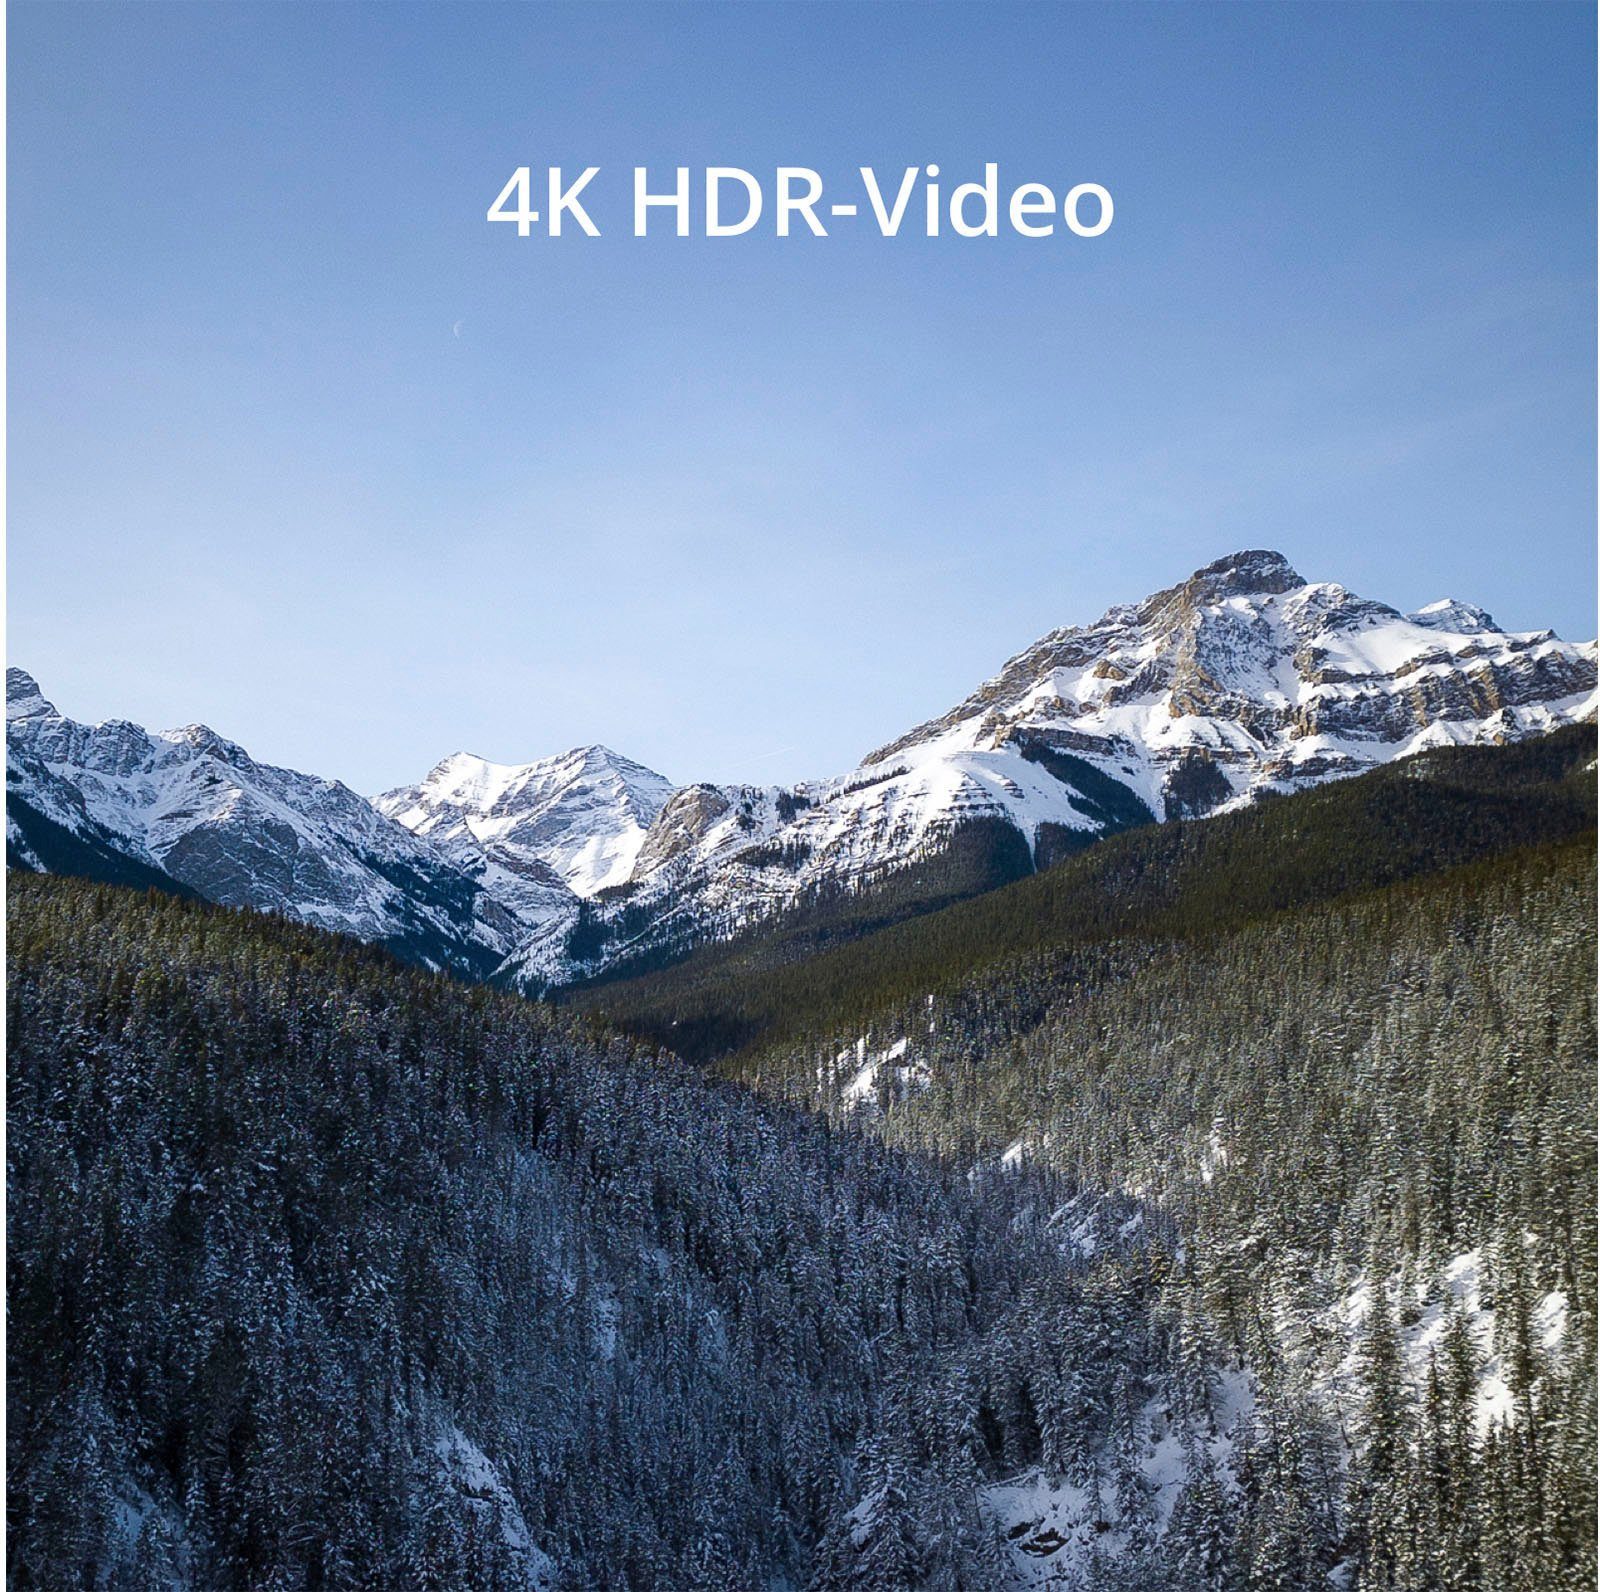 DJI Mini 3 & DJI HD) Drohne (4K RC Ultra